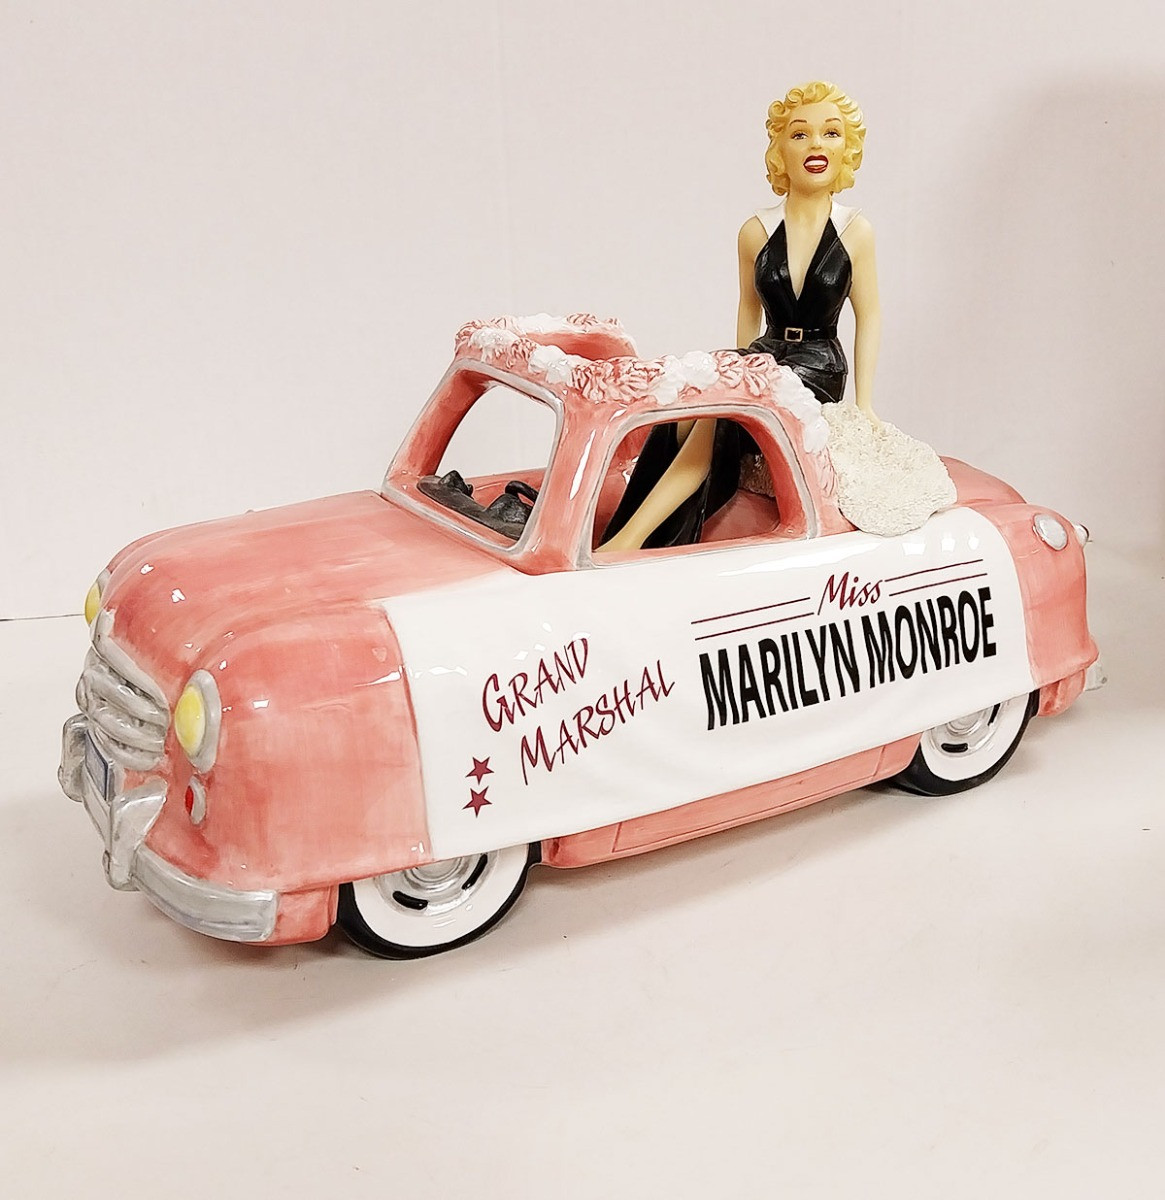 Marilyn Monroe Grand Marshall Cookie Jar - Zeldzaam Origineel